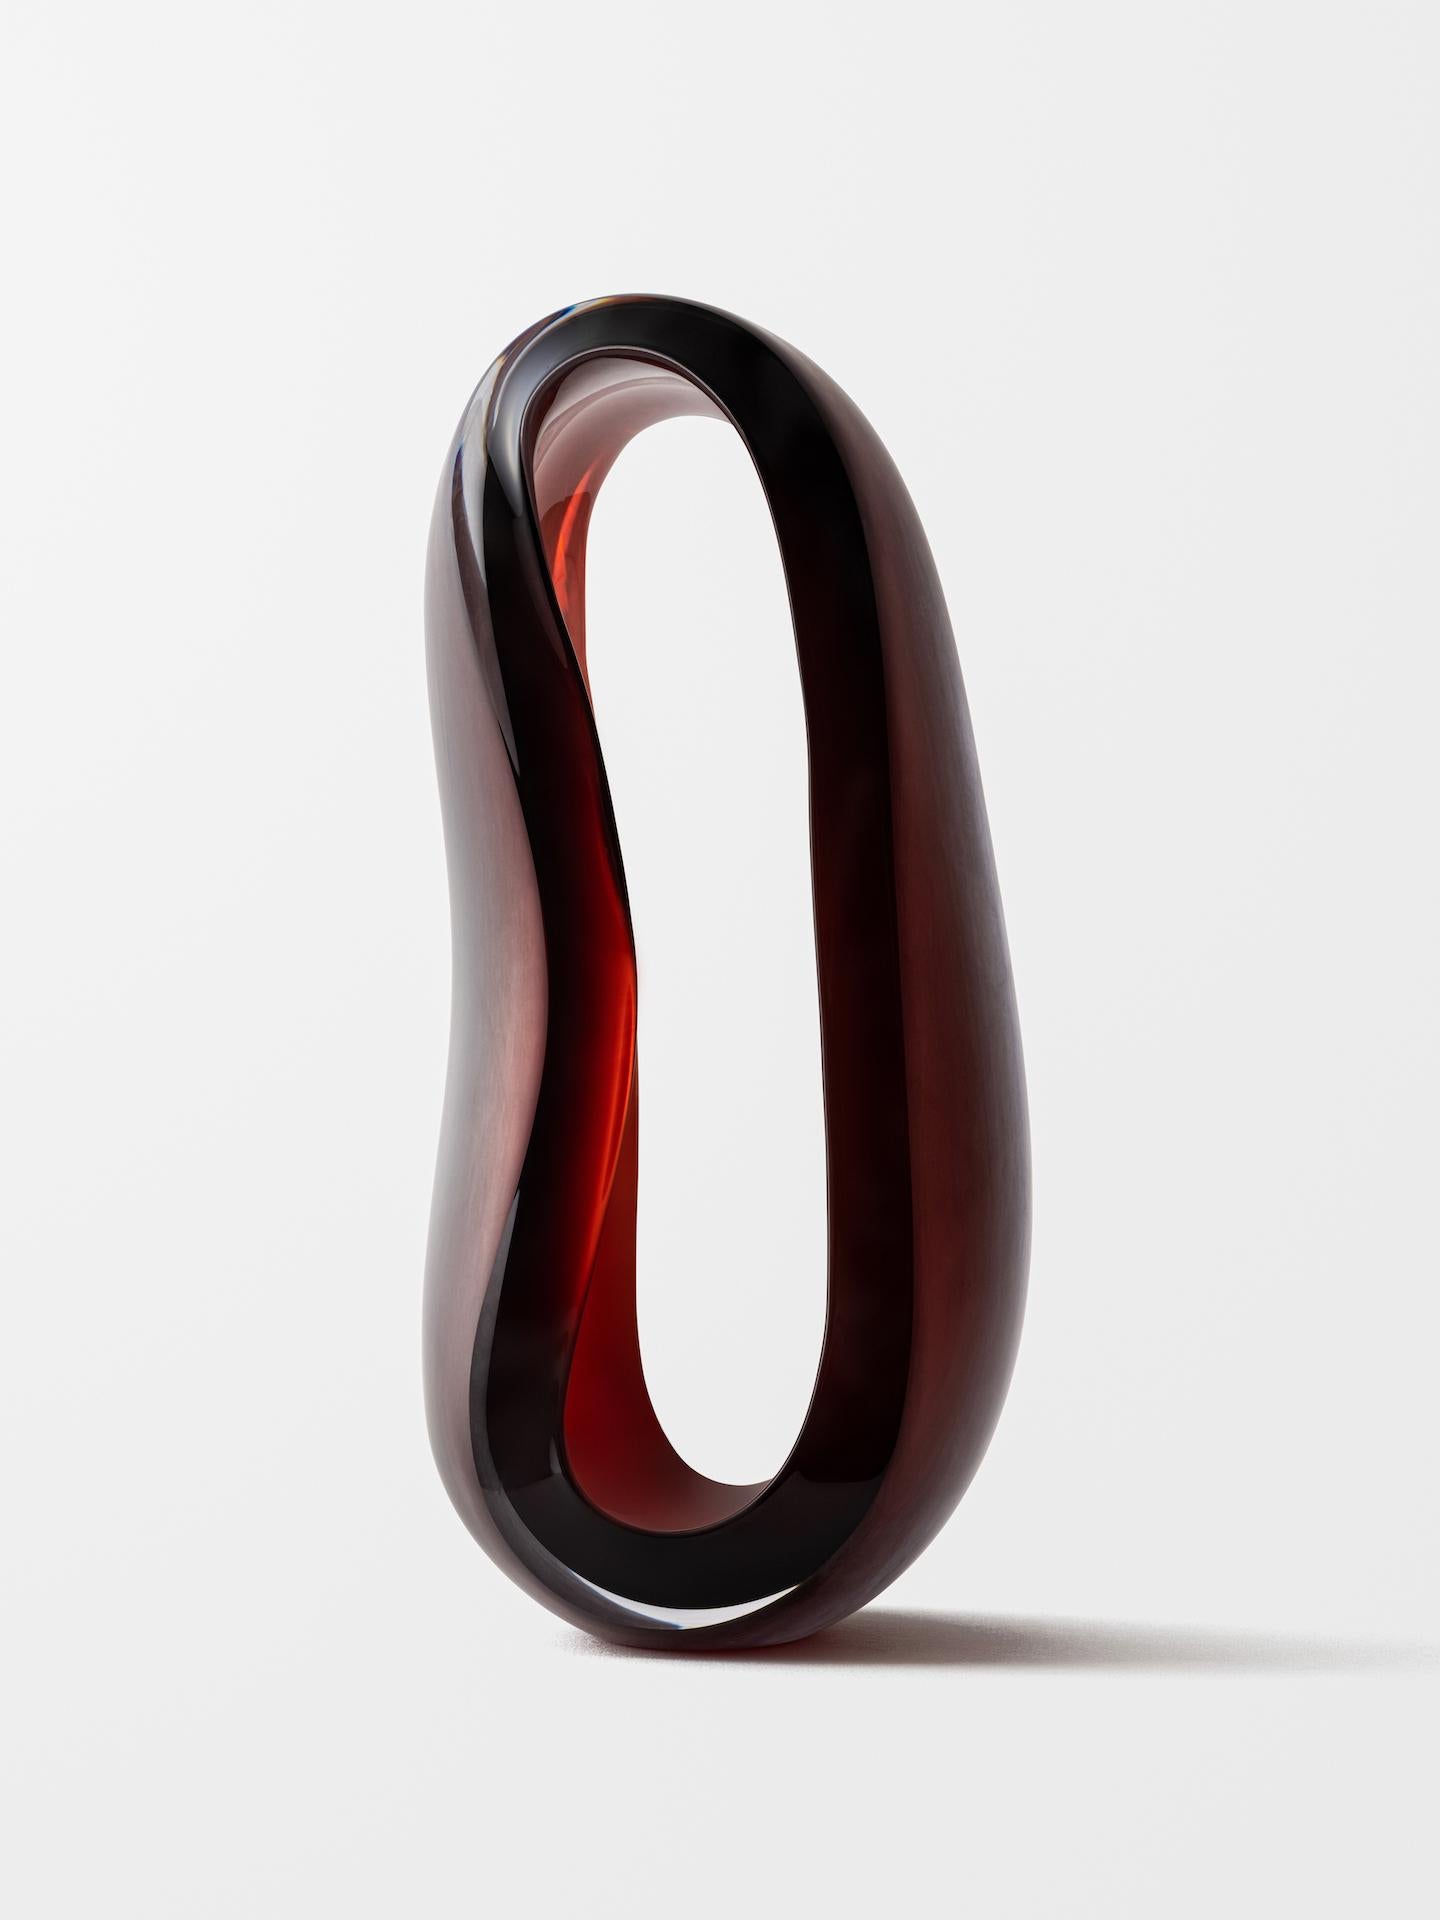 Jonas Noël Niedermann Abstract Sculpture - Loops (Amber)